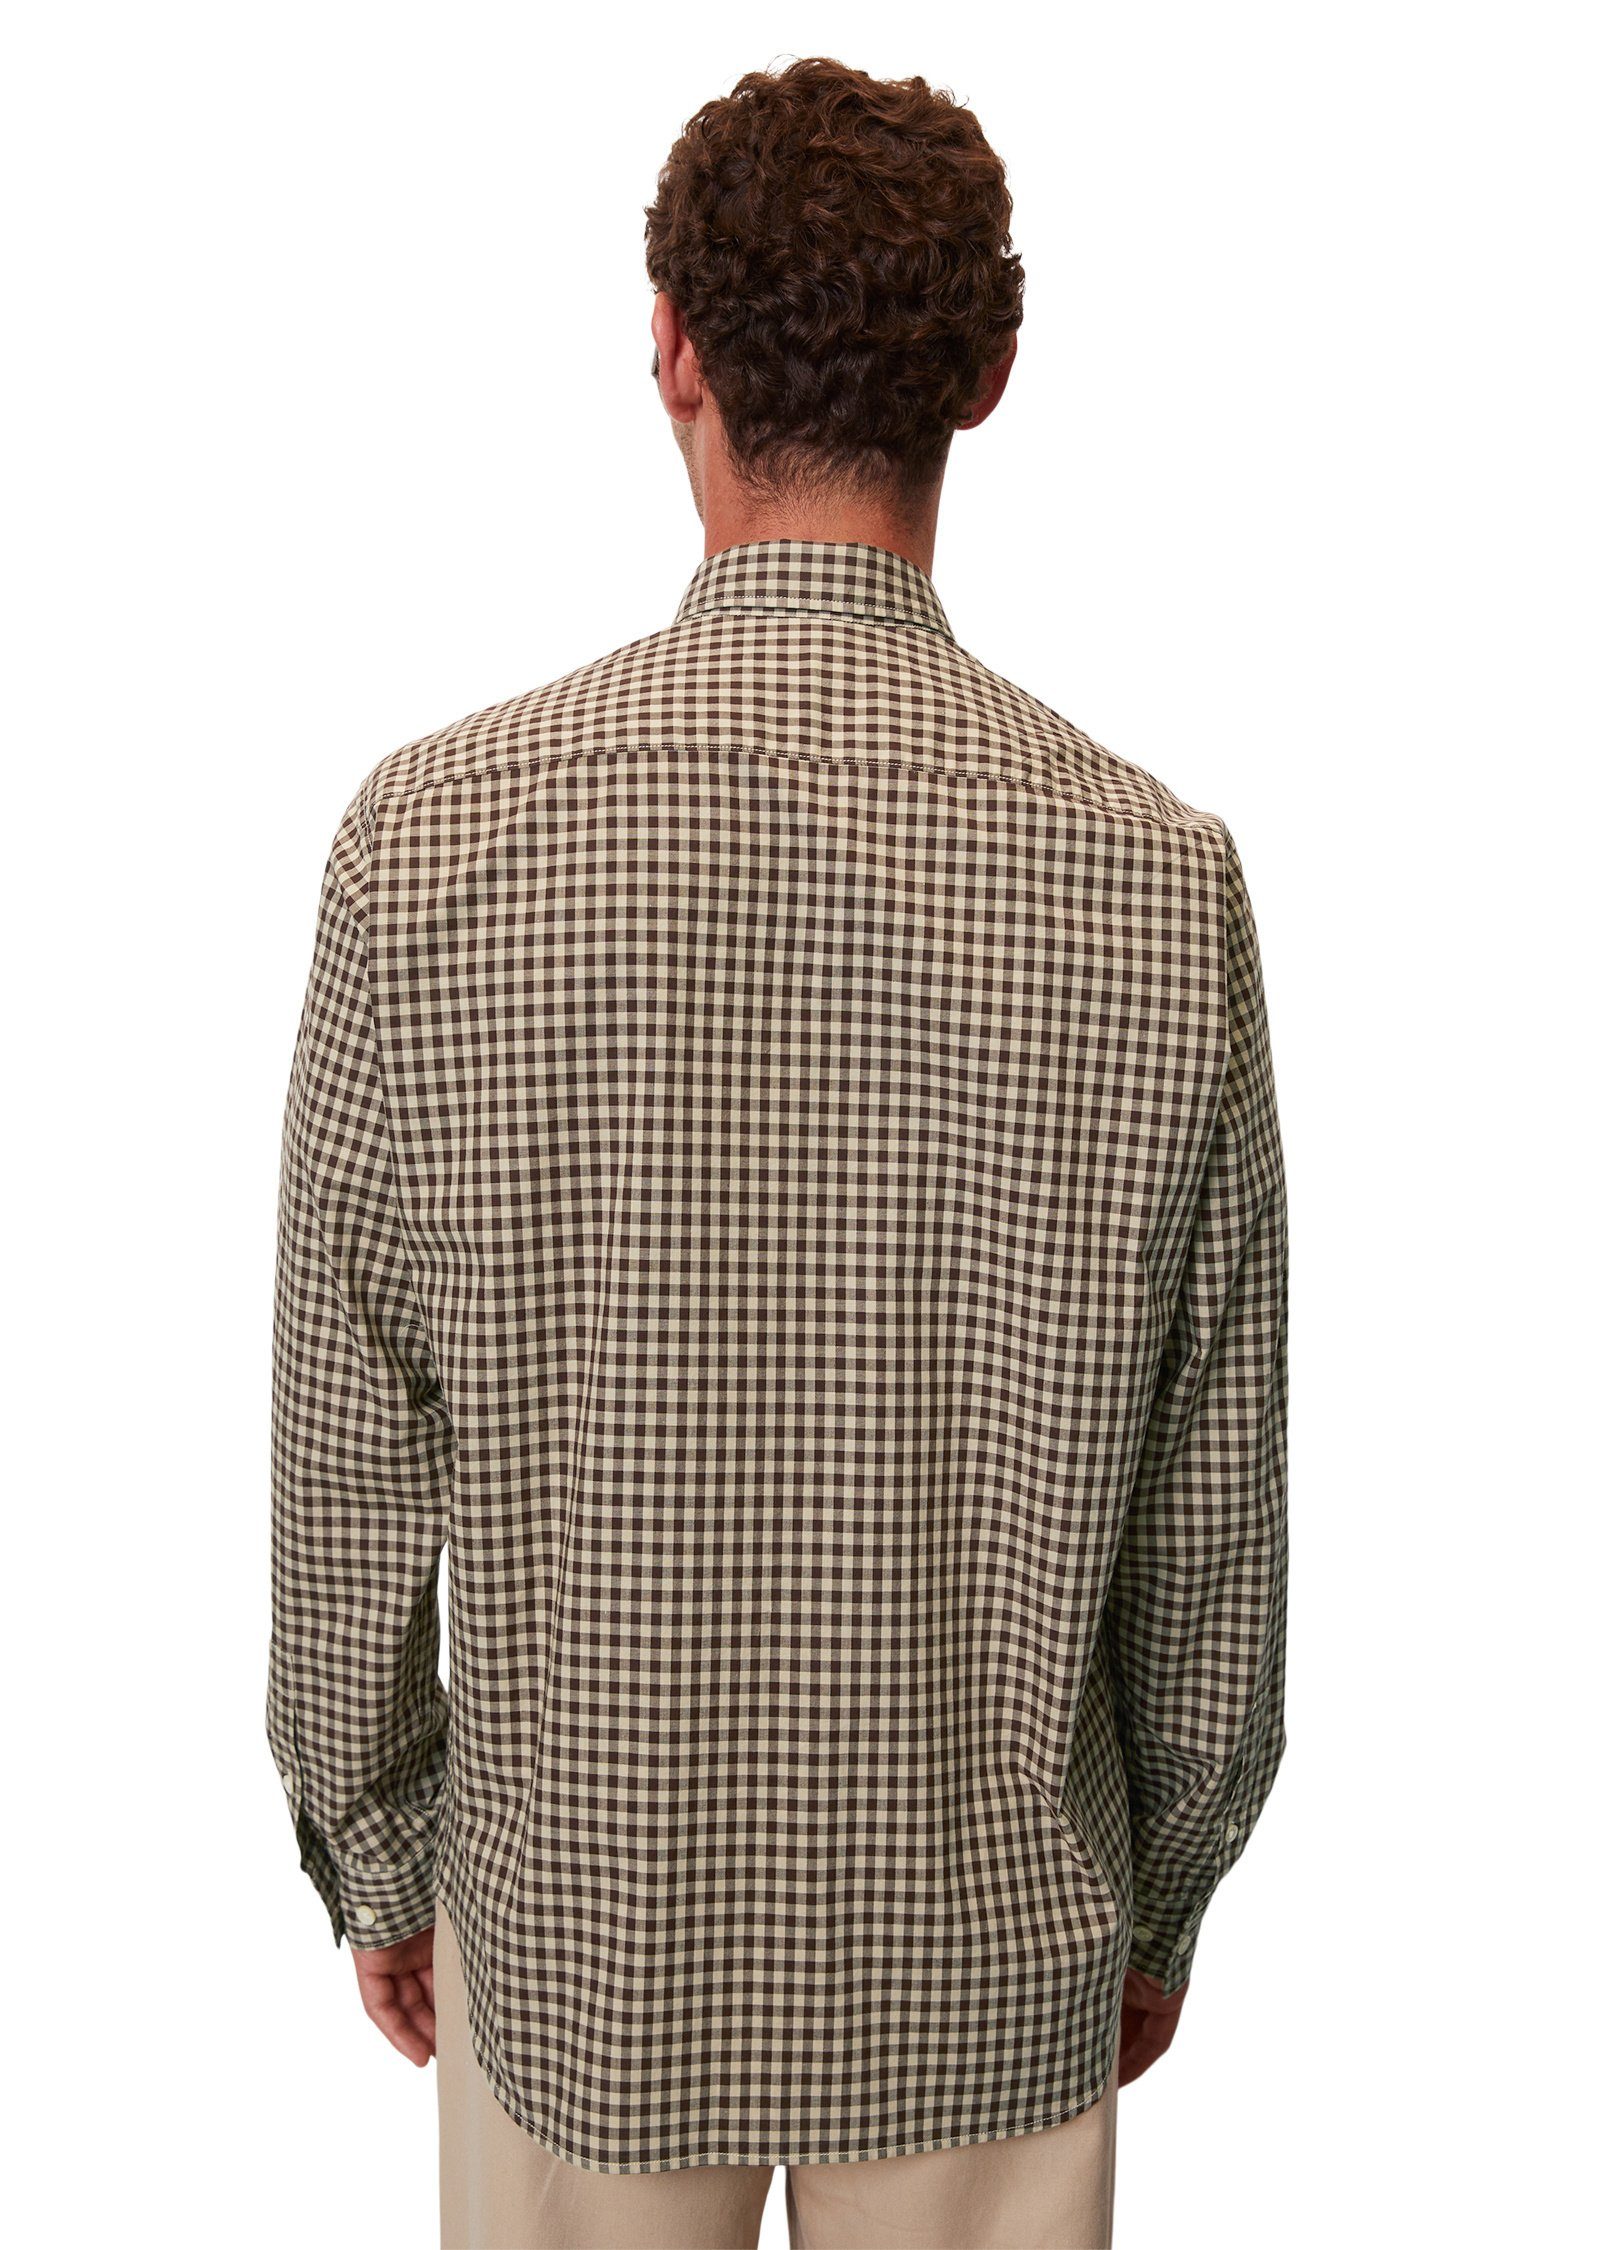 Marc reiner Bio-Baumwolle Langarmhemd dunkelbraun aus O'Polo